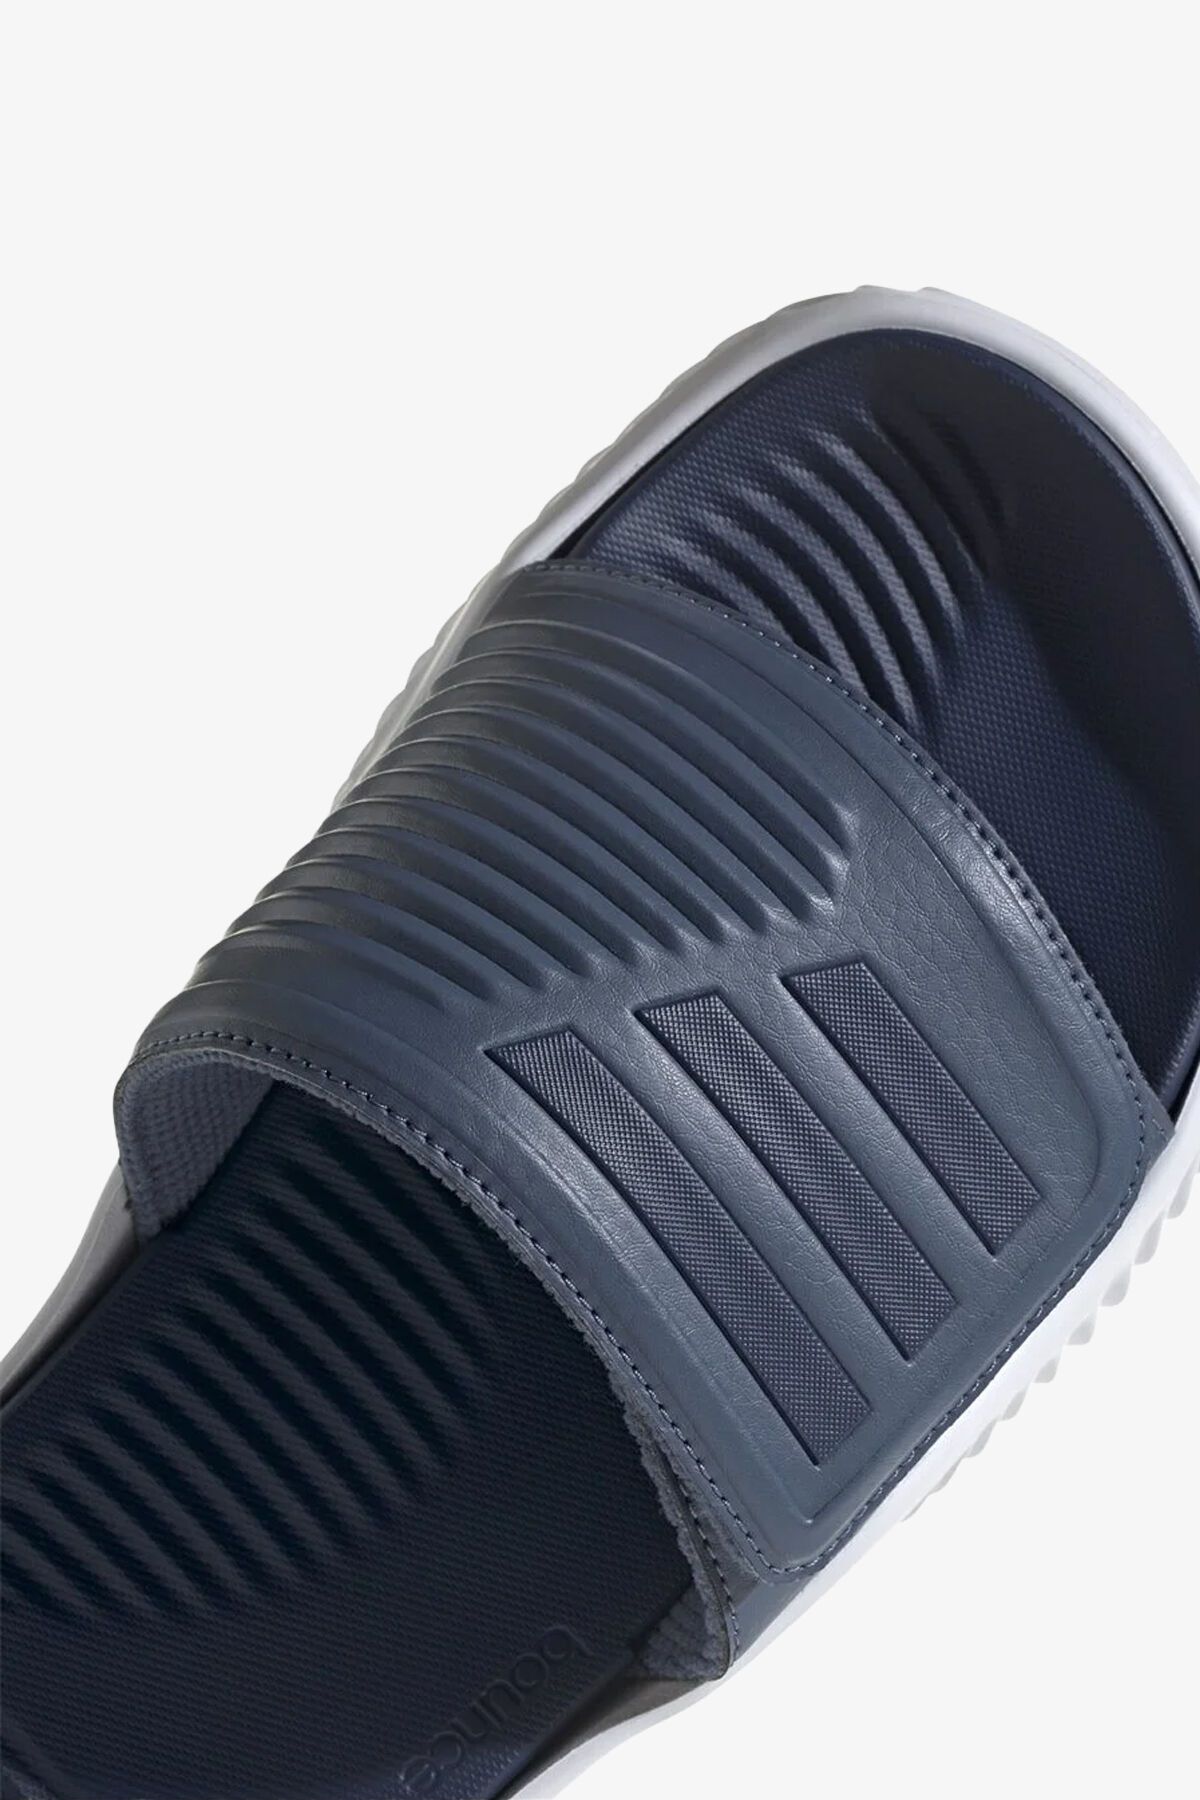 adidas Alphabounce Slide 2 Slipper خاکستری یونیکس IF0814